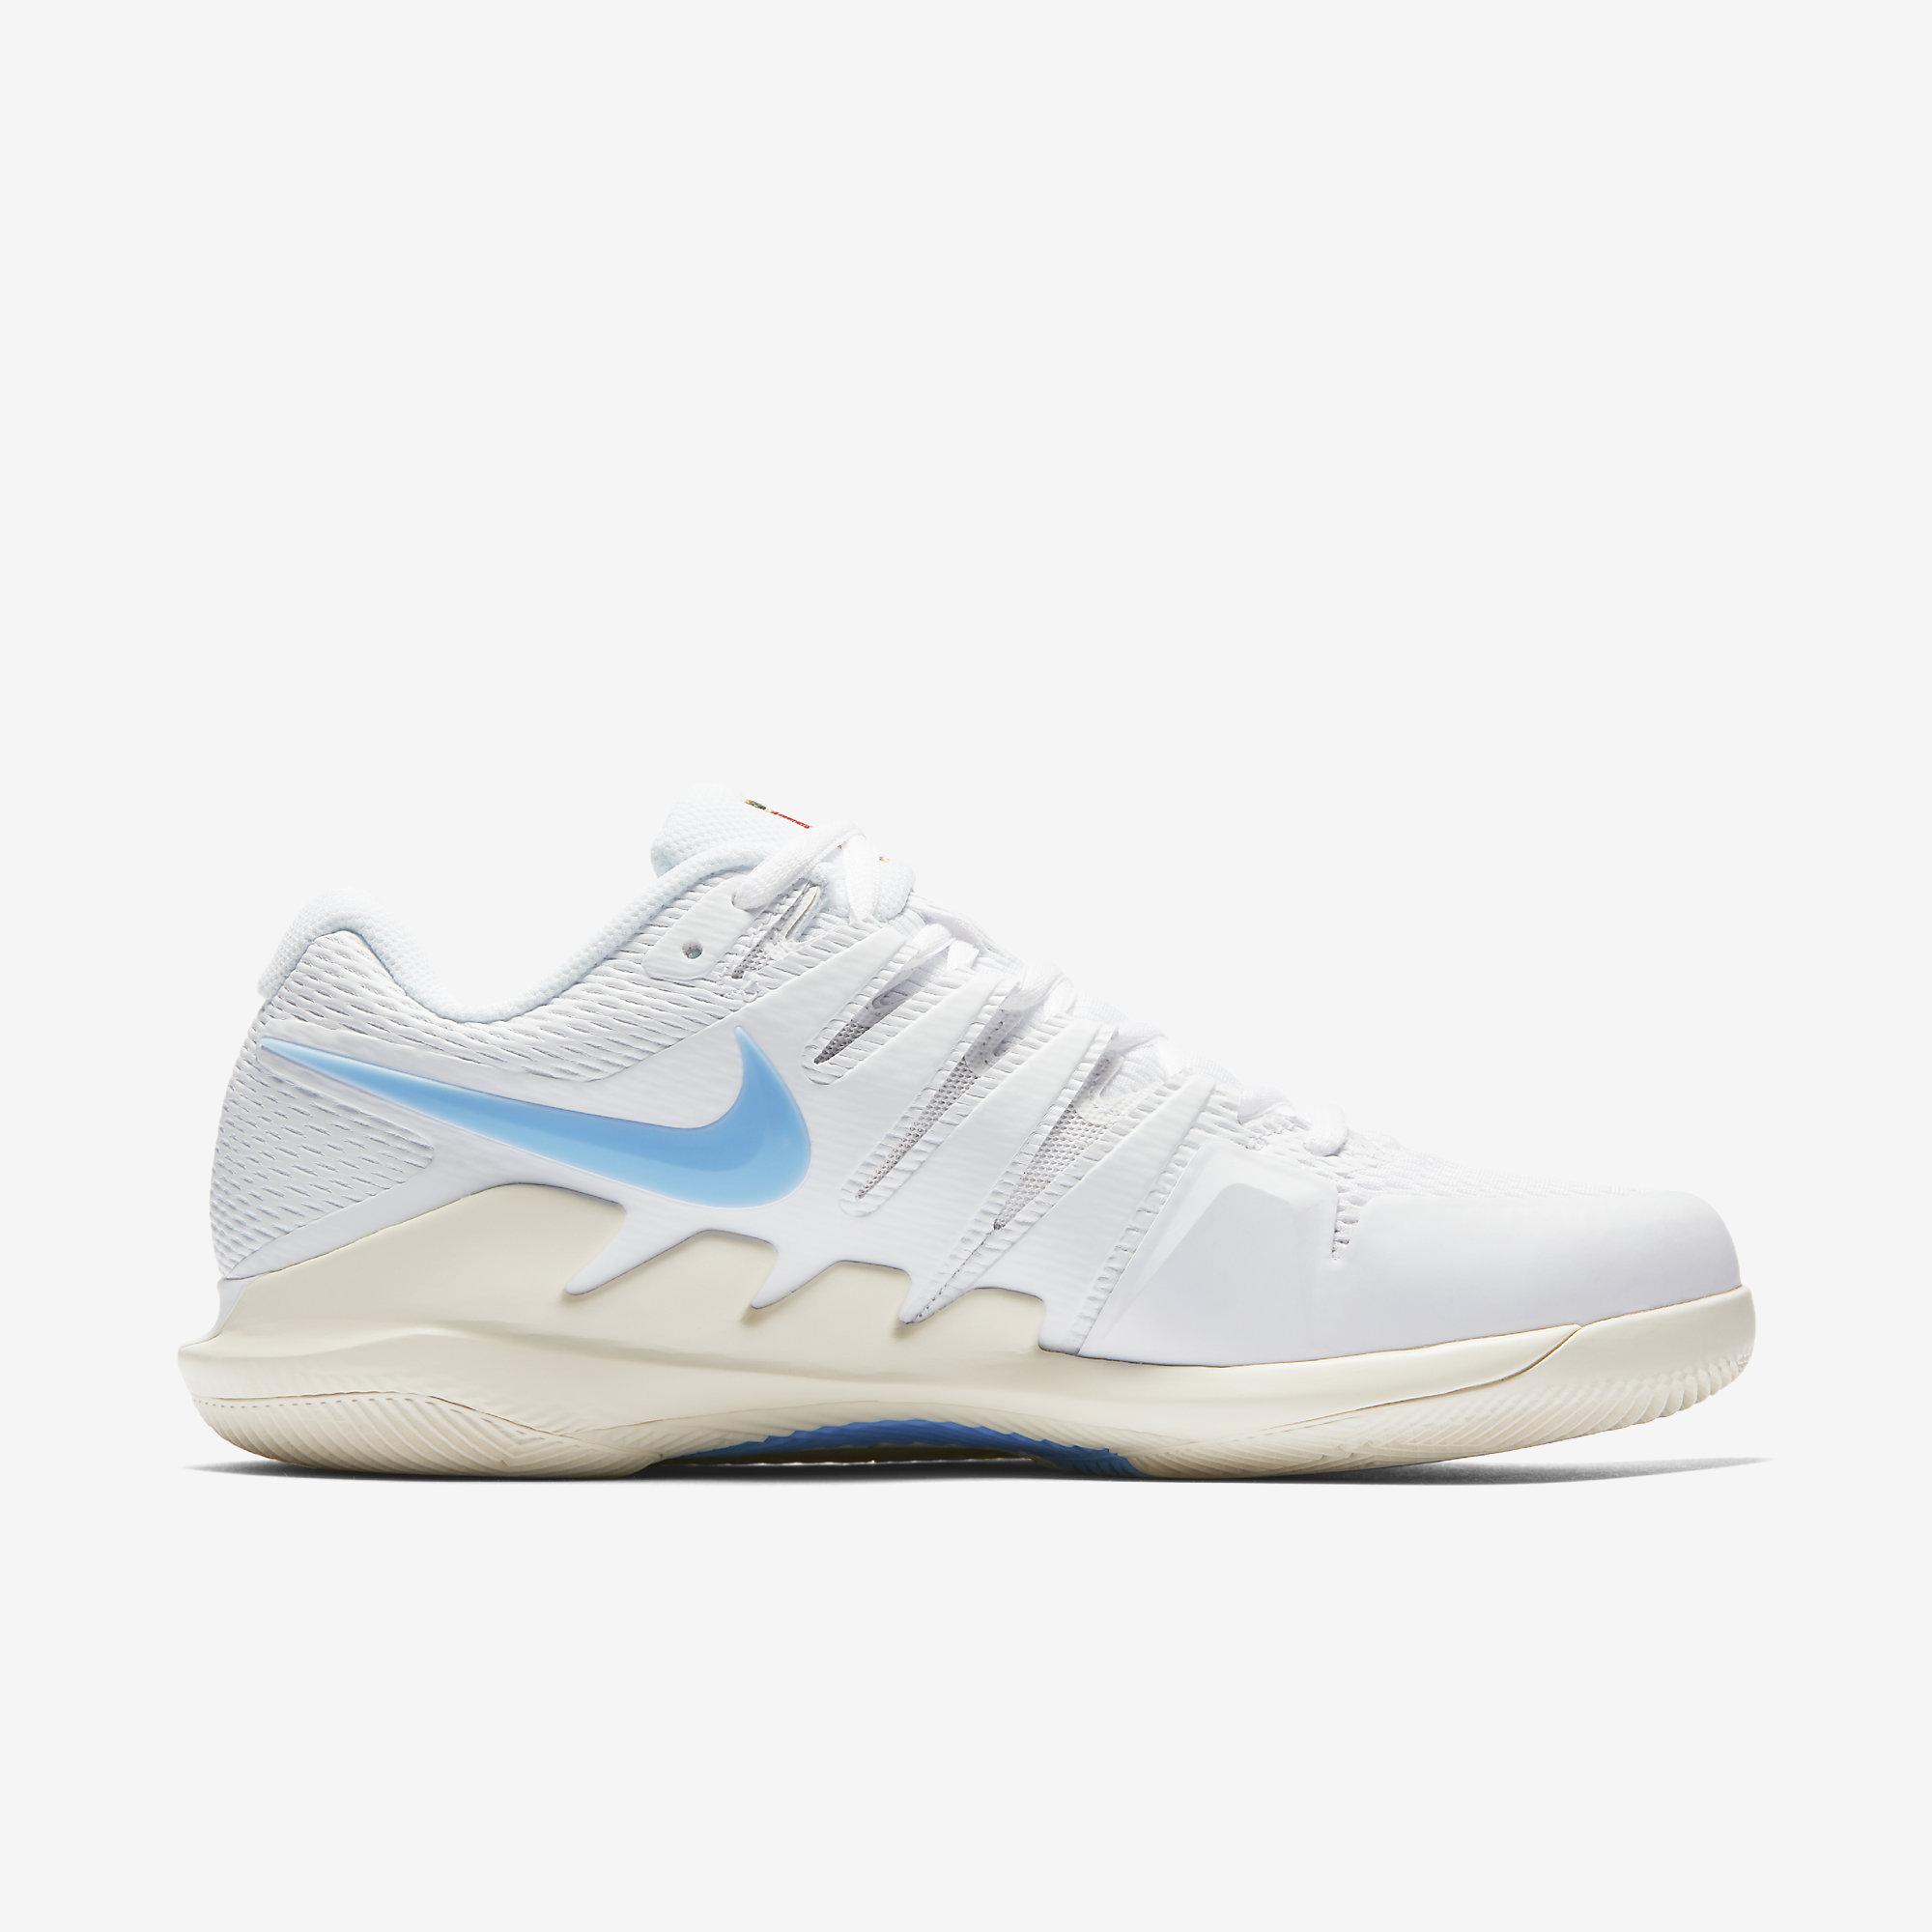 Nike Mens Air Zoom Vapor X Tennis Shoes - White/Blue - Tennisnuts.com